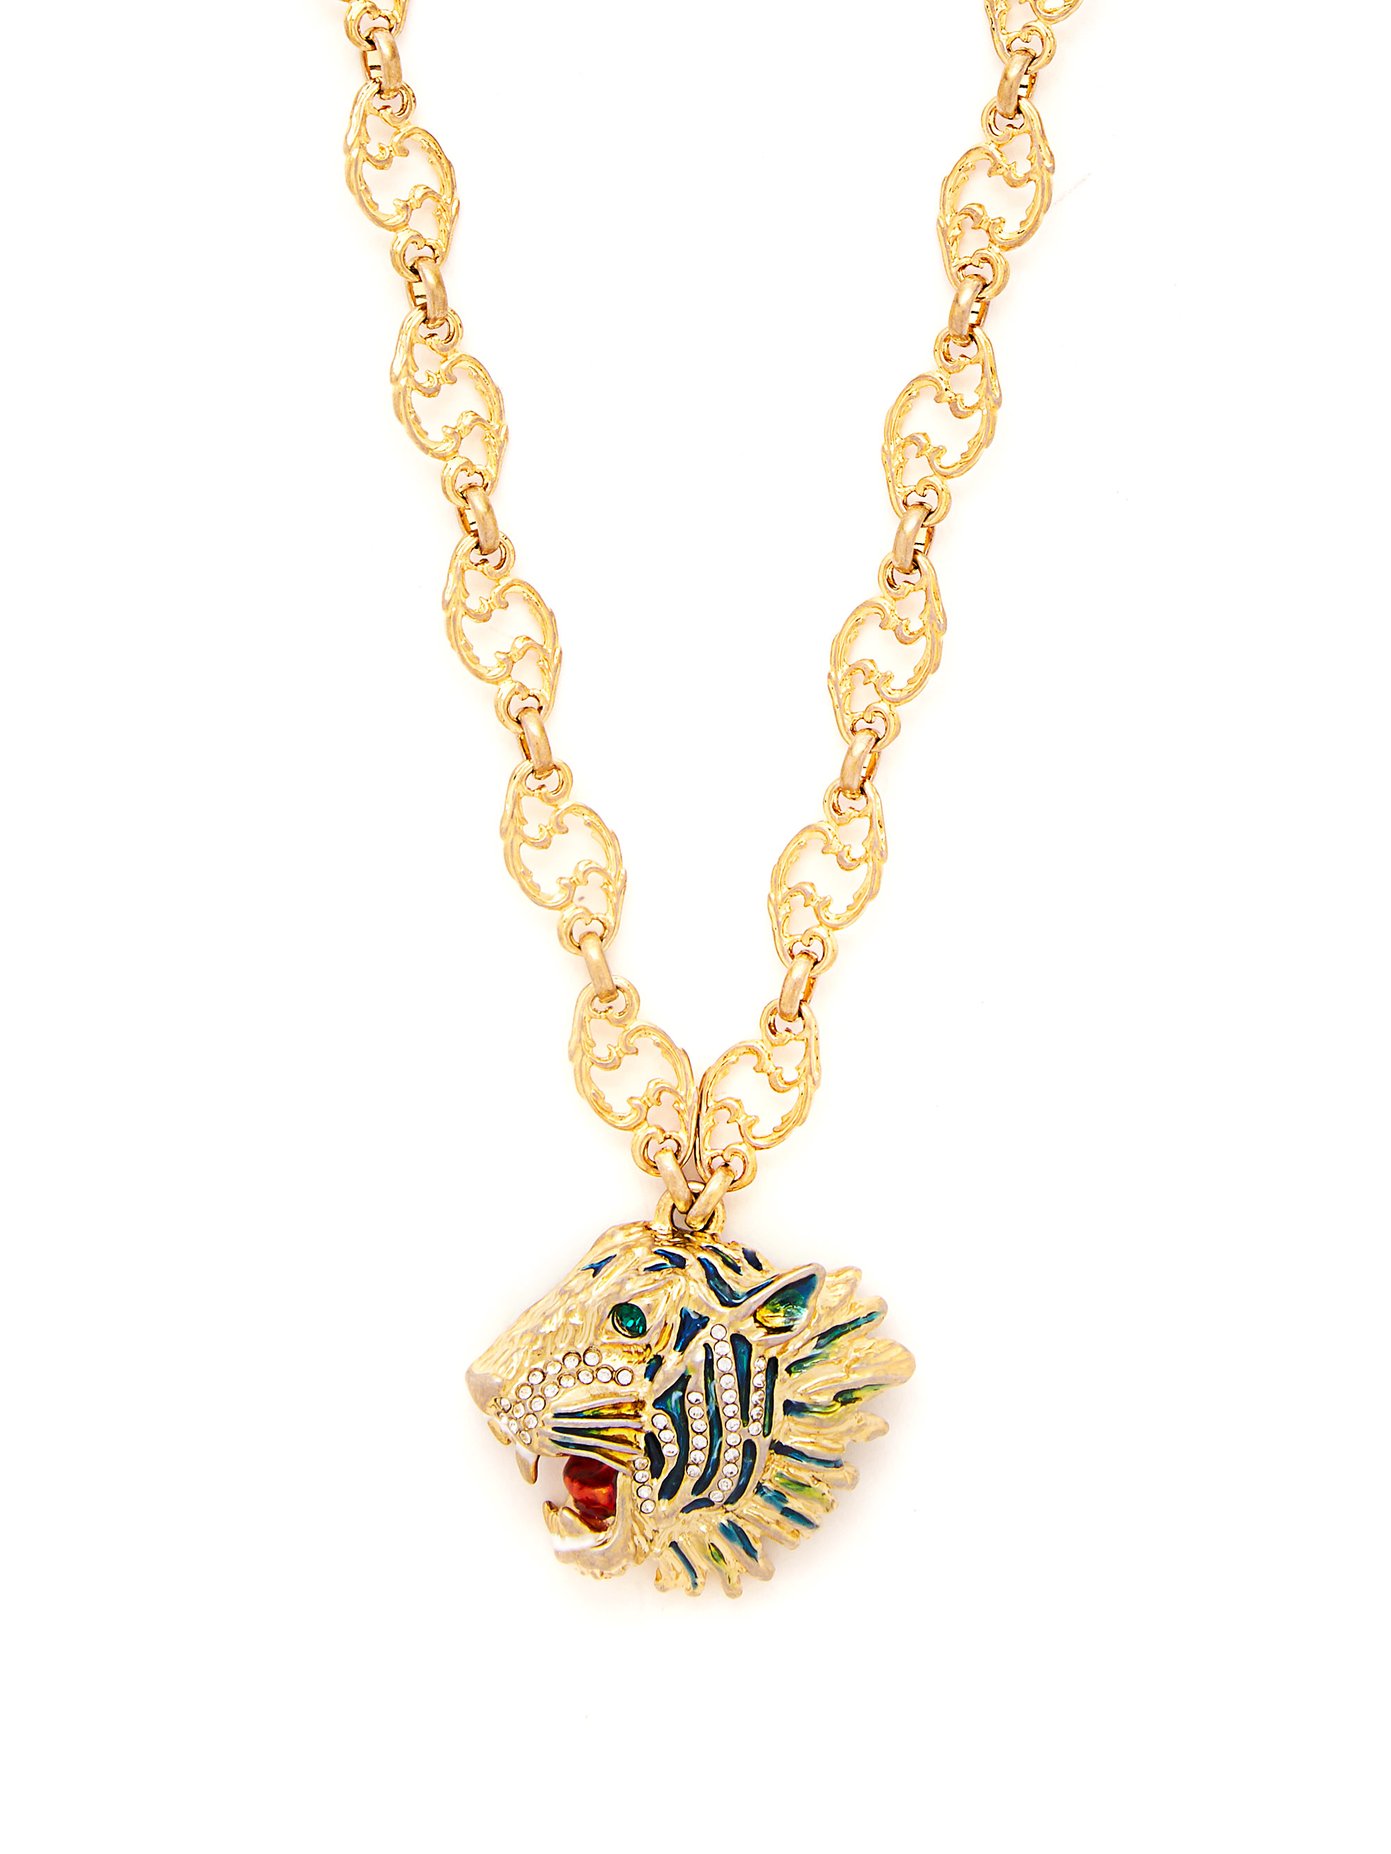 Roaring tiger pendant necklace | Gucci 